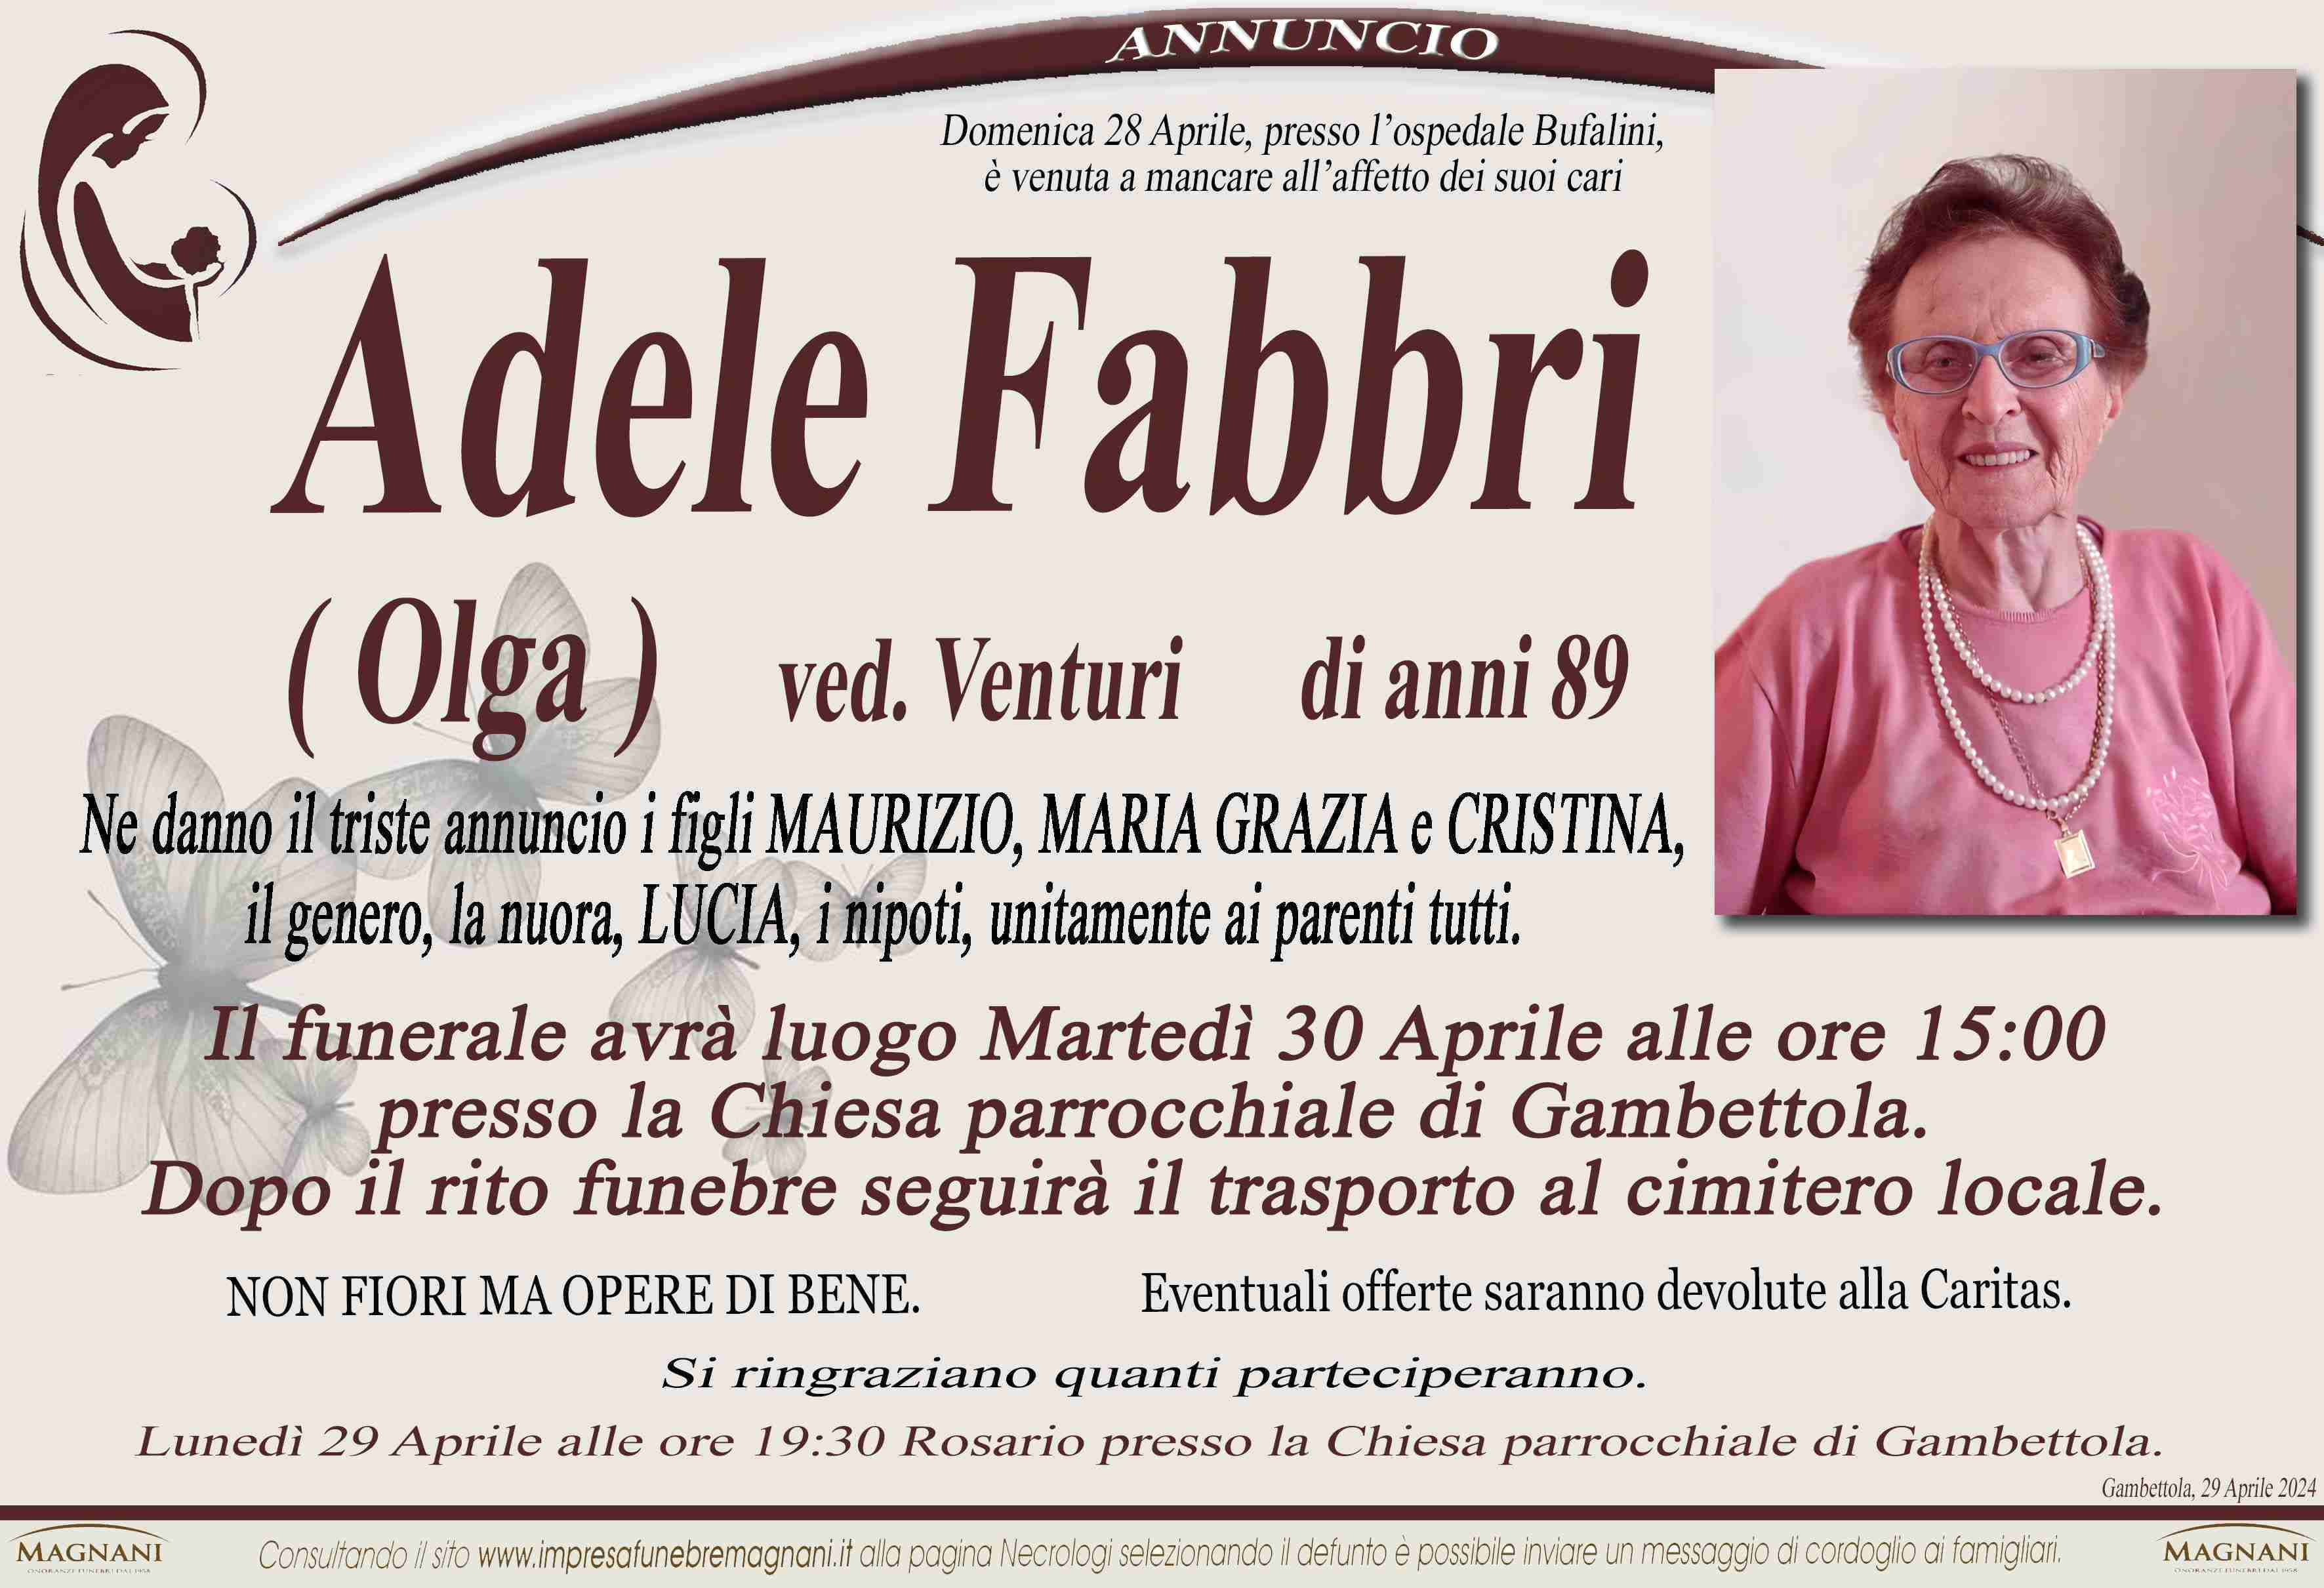 Adele Fabbri